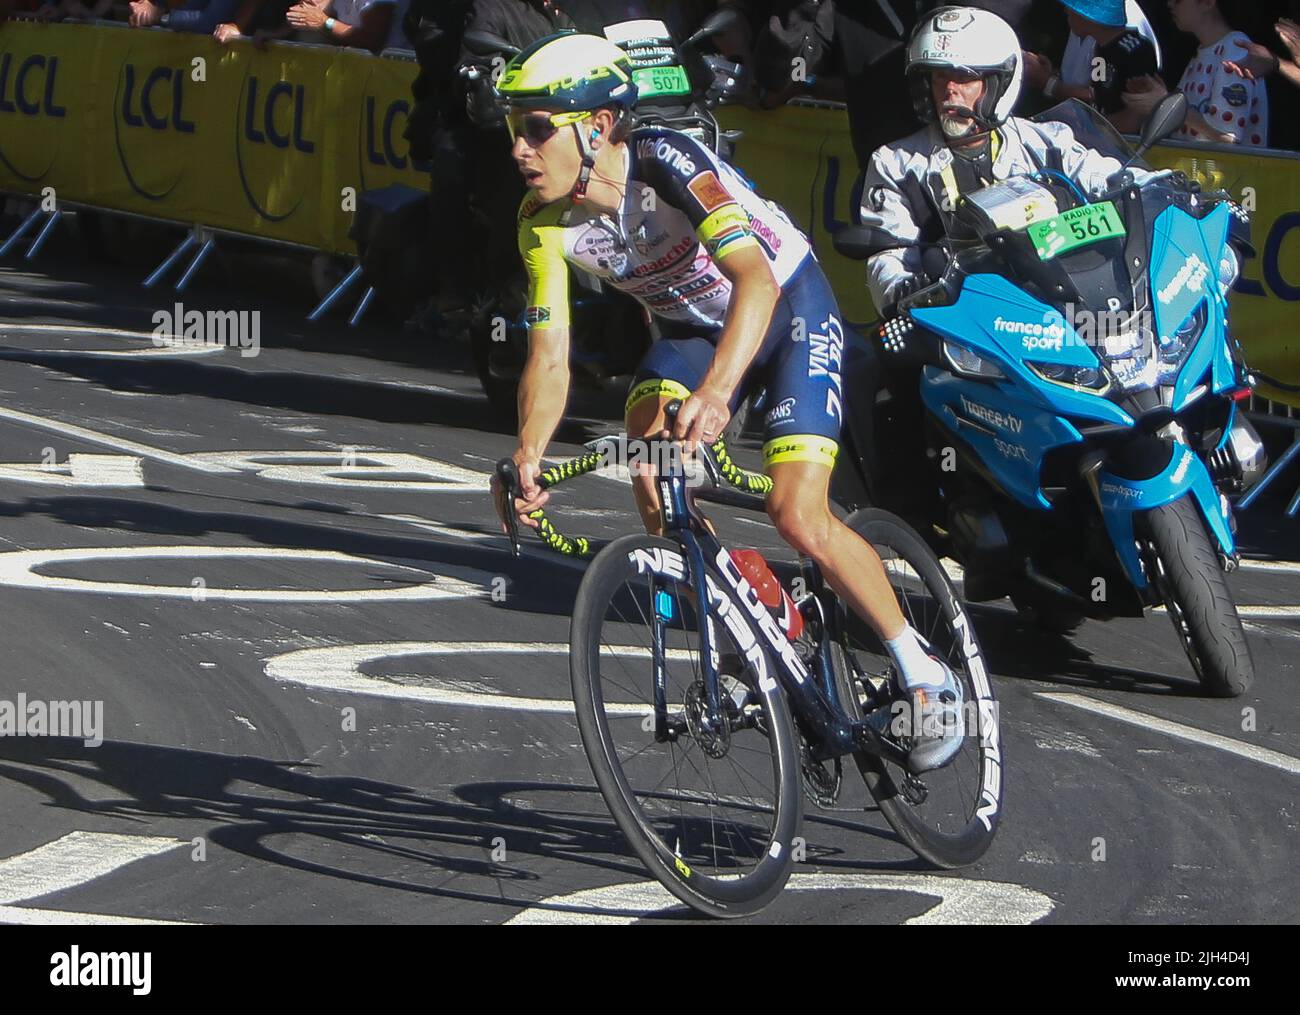 Louis Meintjes di Intermarche - Wanty - Gobert Materiaux durante il Tour de France 2022, gara ciclistica tappa 12, Briancon - Alpe d'Huez (165,5 km) il 14 luglio 2022 a Huez, Francia - Foto: Laurent Lairys/DPPI/LiveMedia Foto Stock